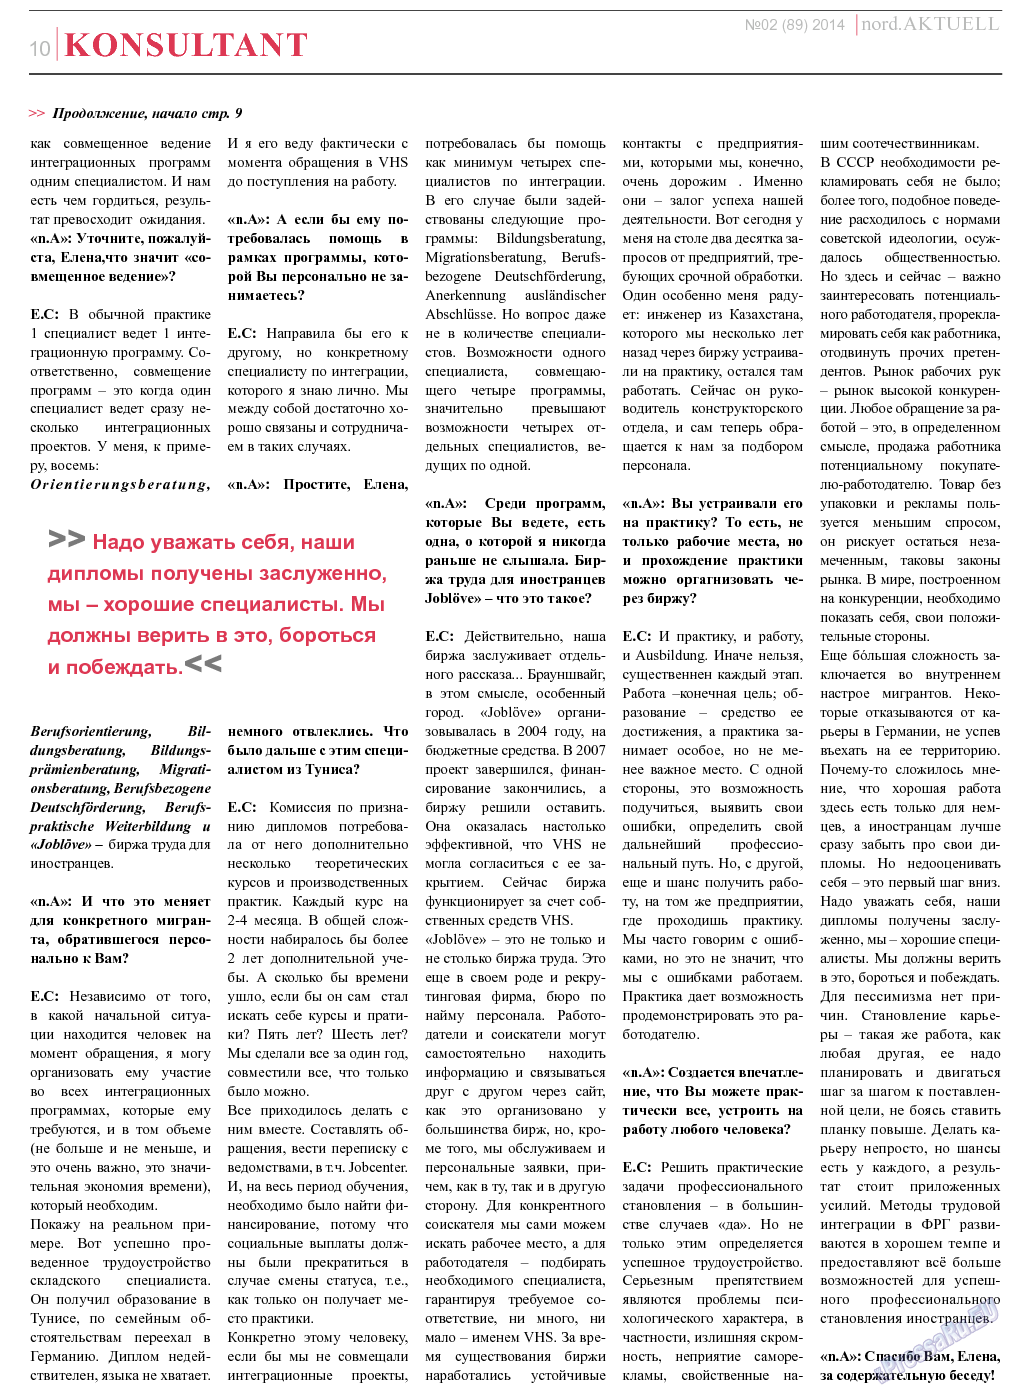 nord.Aktuell, газета. 2014 №2 стр.10